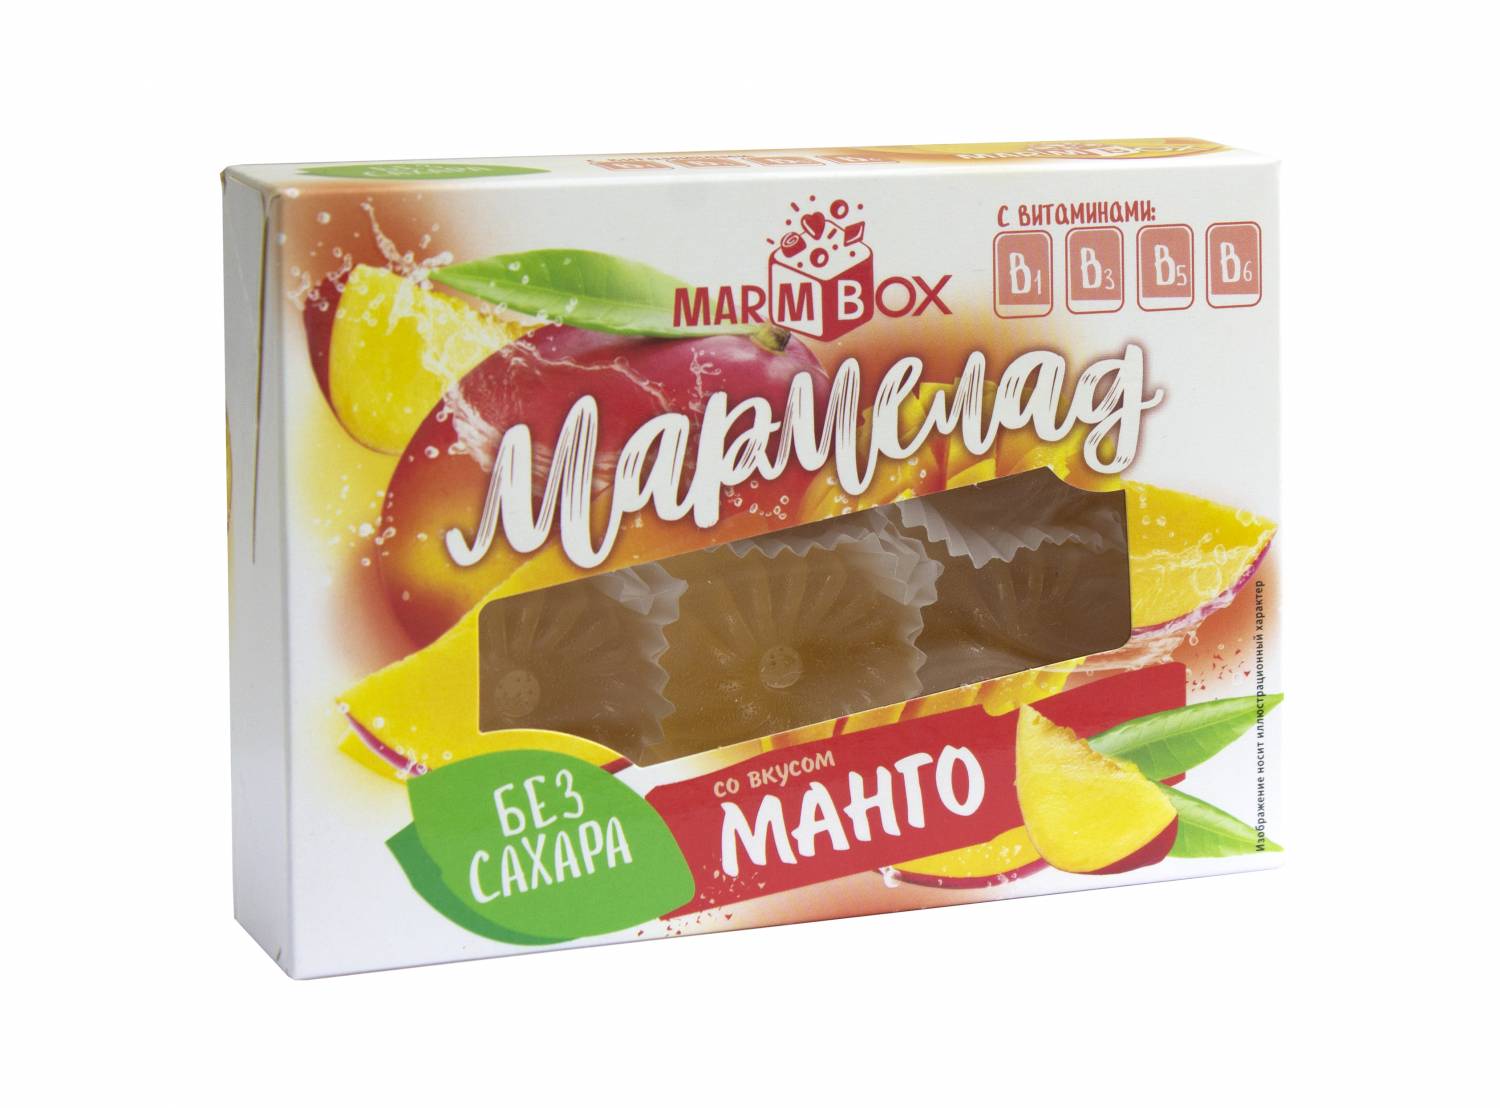 Мармелад "Marmbox" на Фруктозе со вкусом Манго 200г/Мармеладная сказка